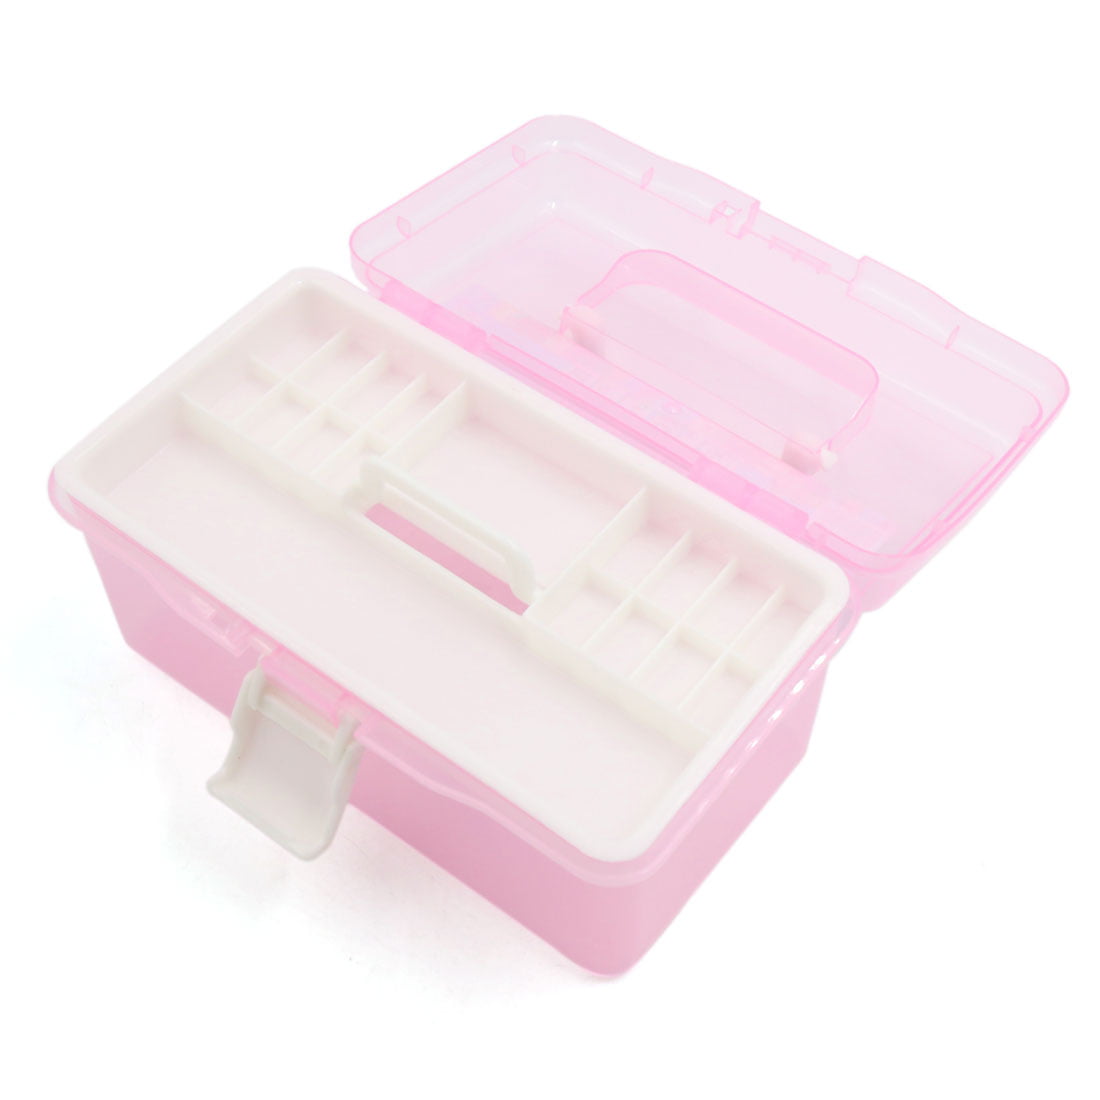 Papaba Nail Art Storage Box,Transparent Nail Supplies Brush Kit Storage Box Plastic Container Organizer Case, Size: One size, Pink